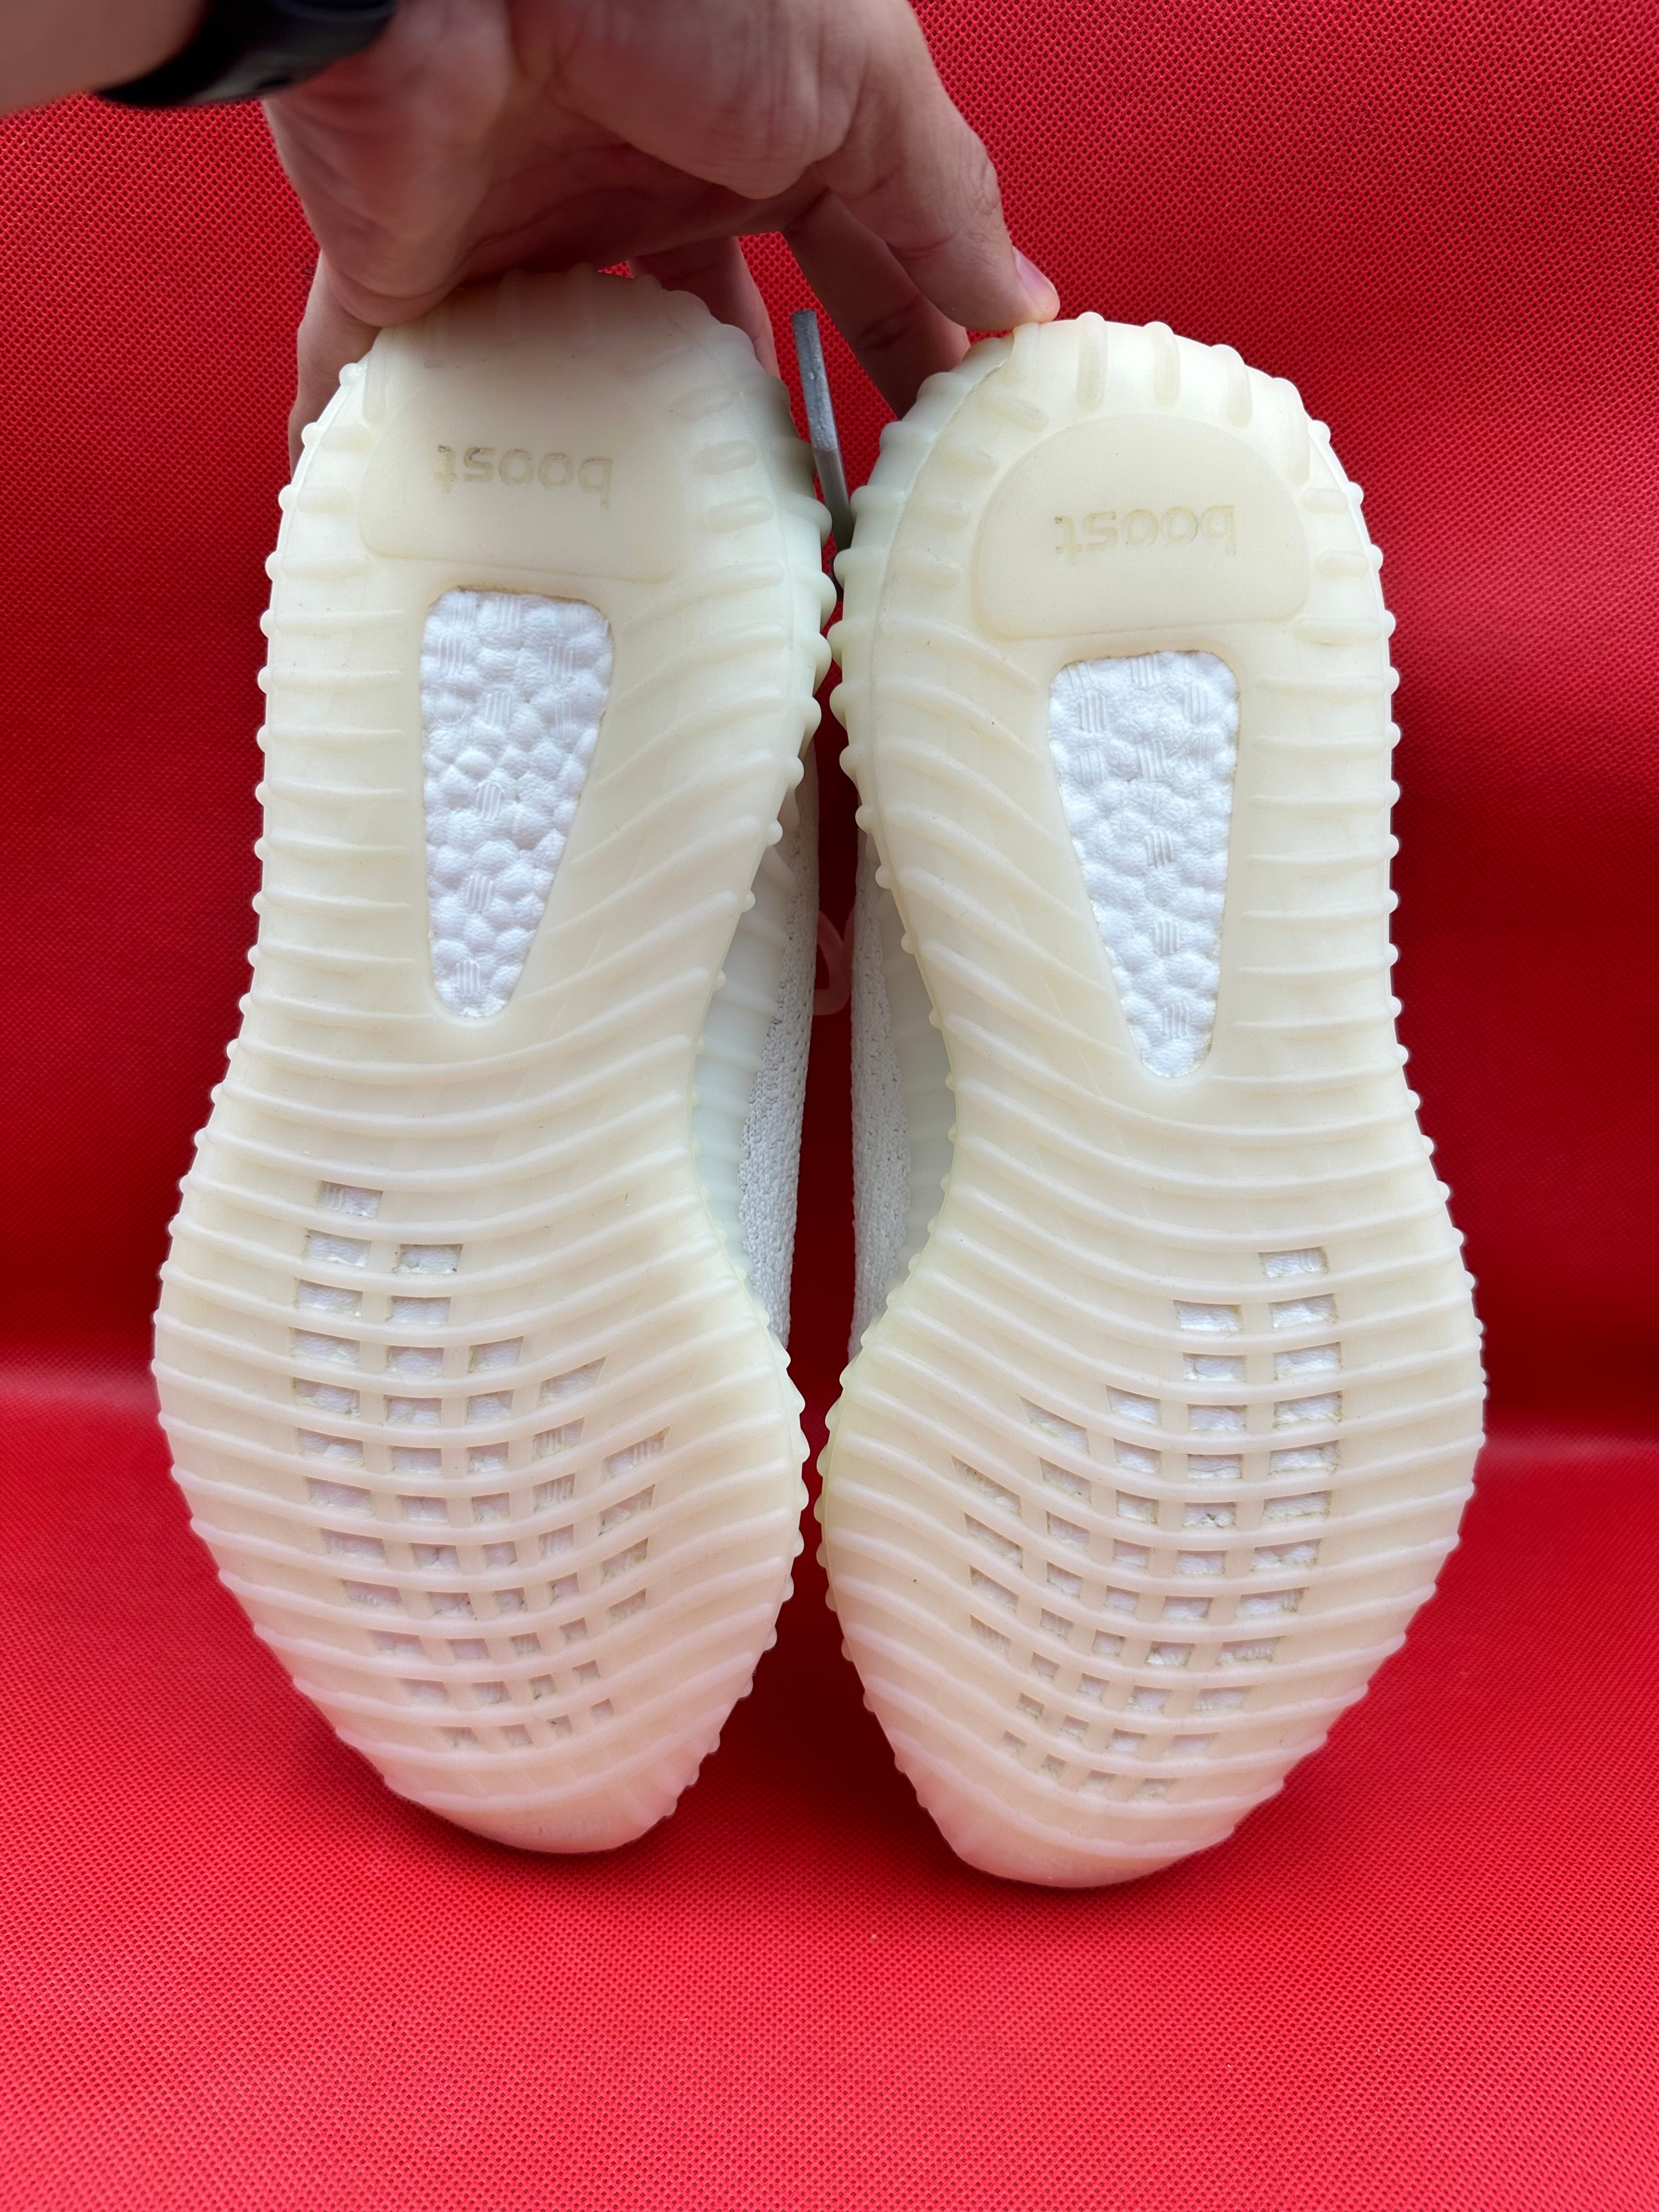 Cream Adidas Yeezy Boost 350 V2 size 8